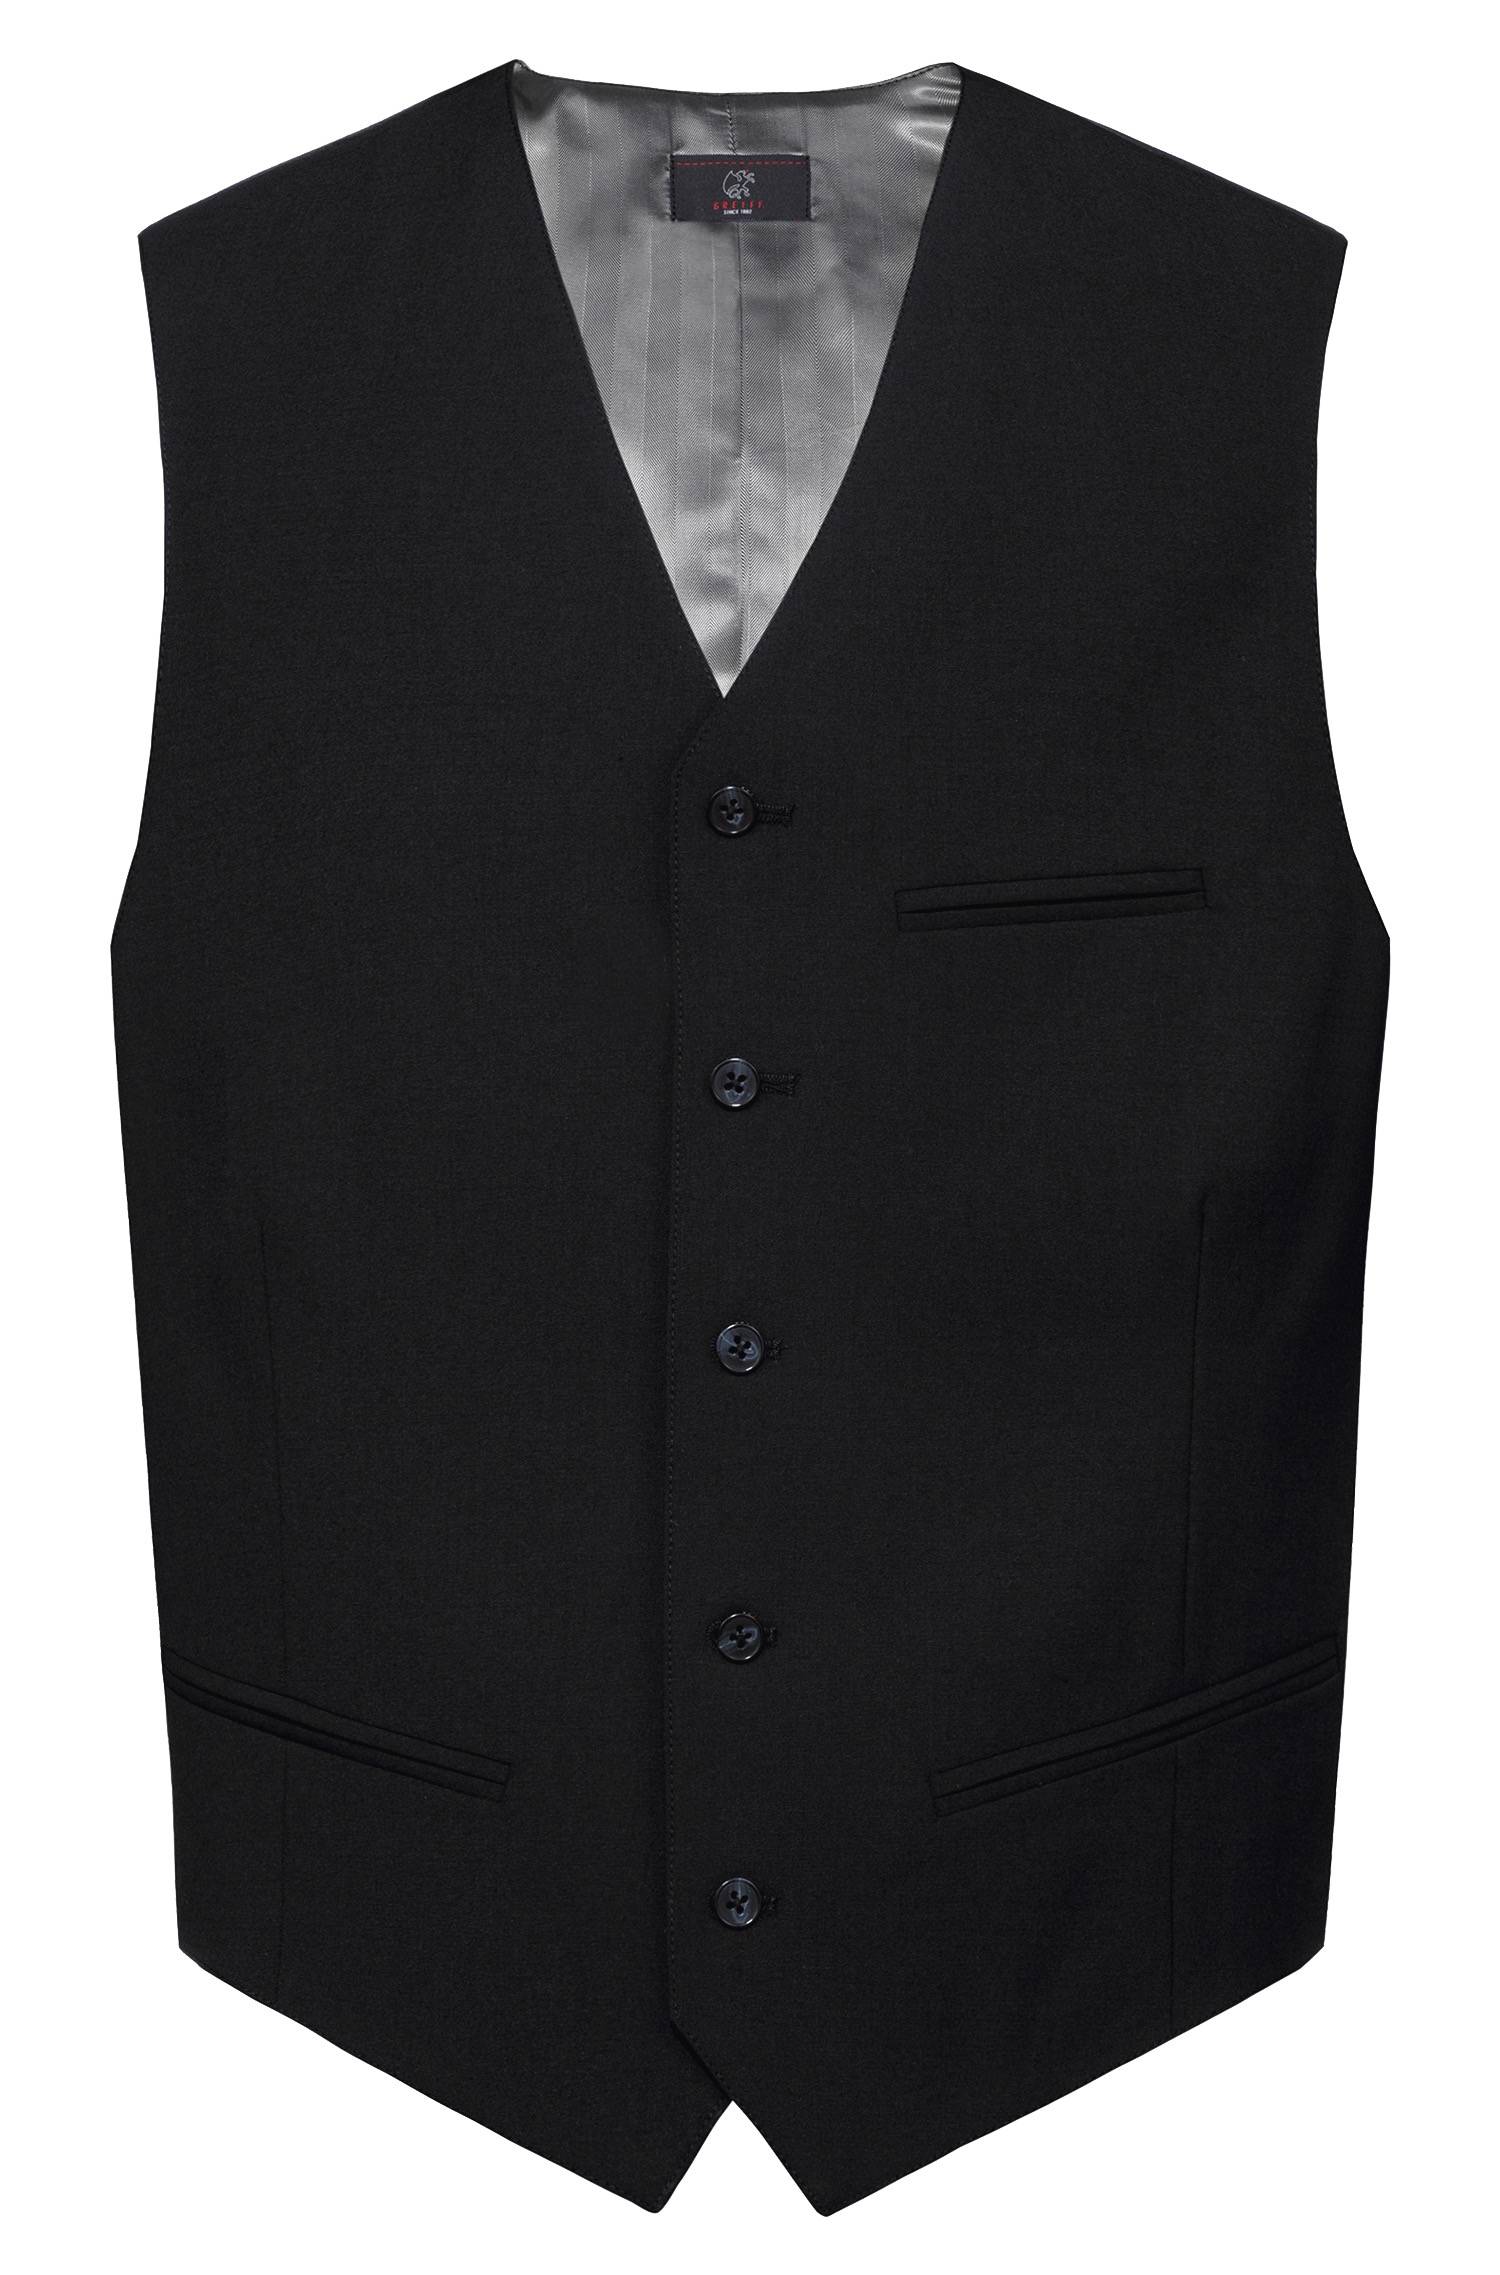 Men's waistcoat 5-button PREMIUM comfort fit